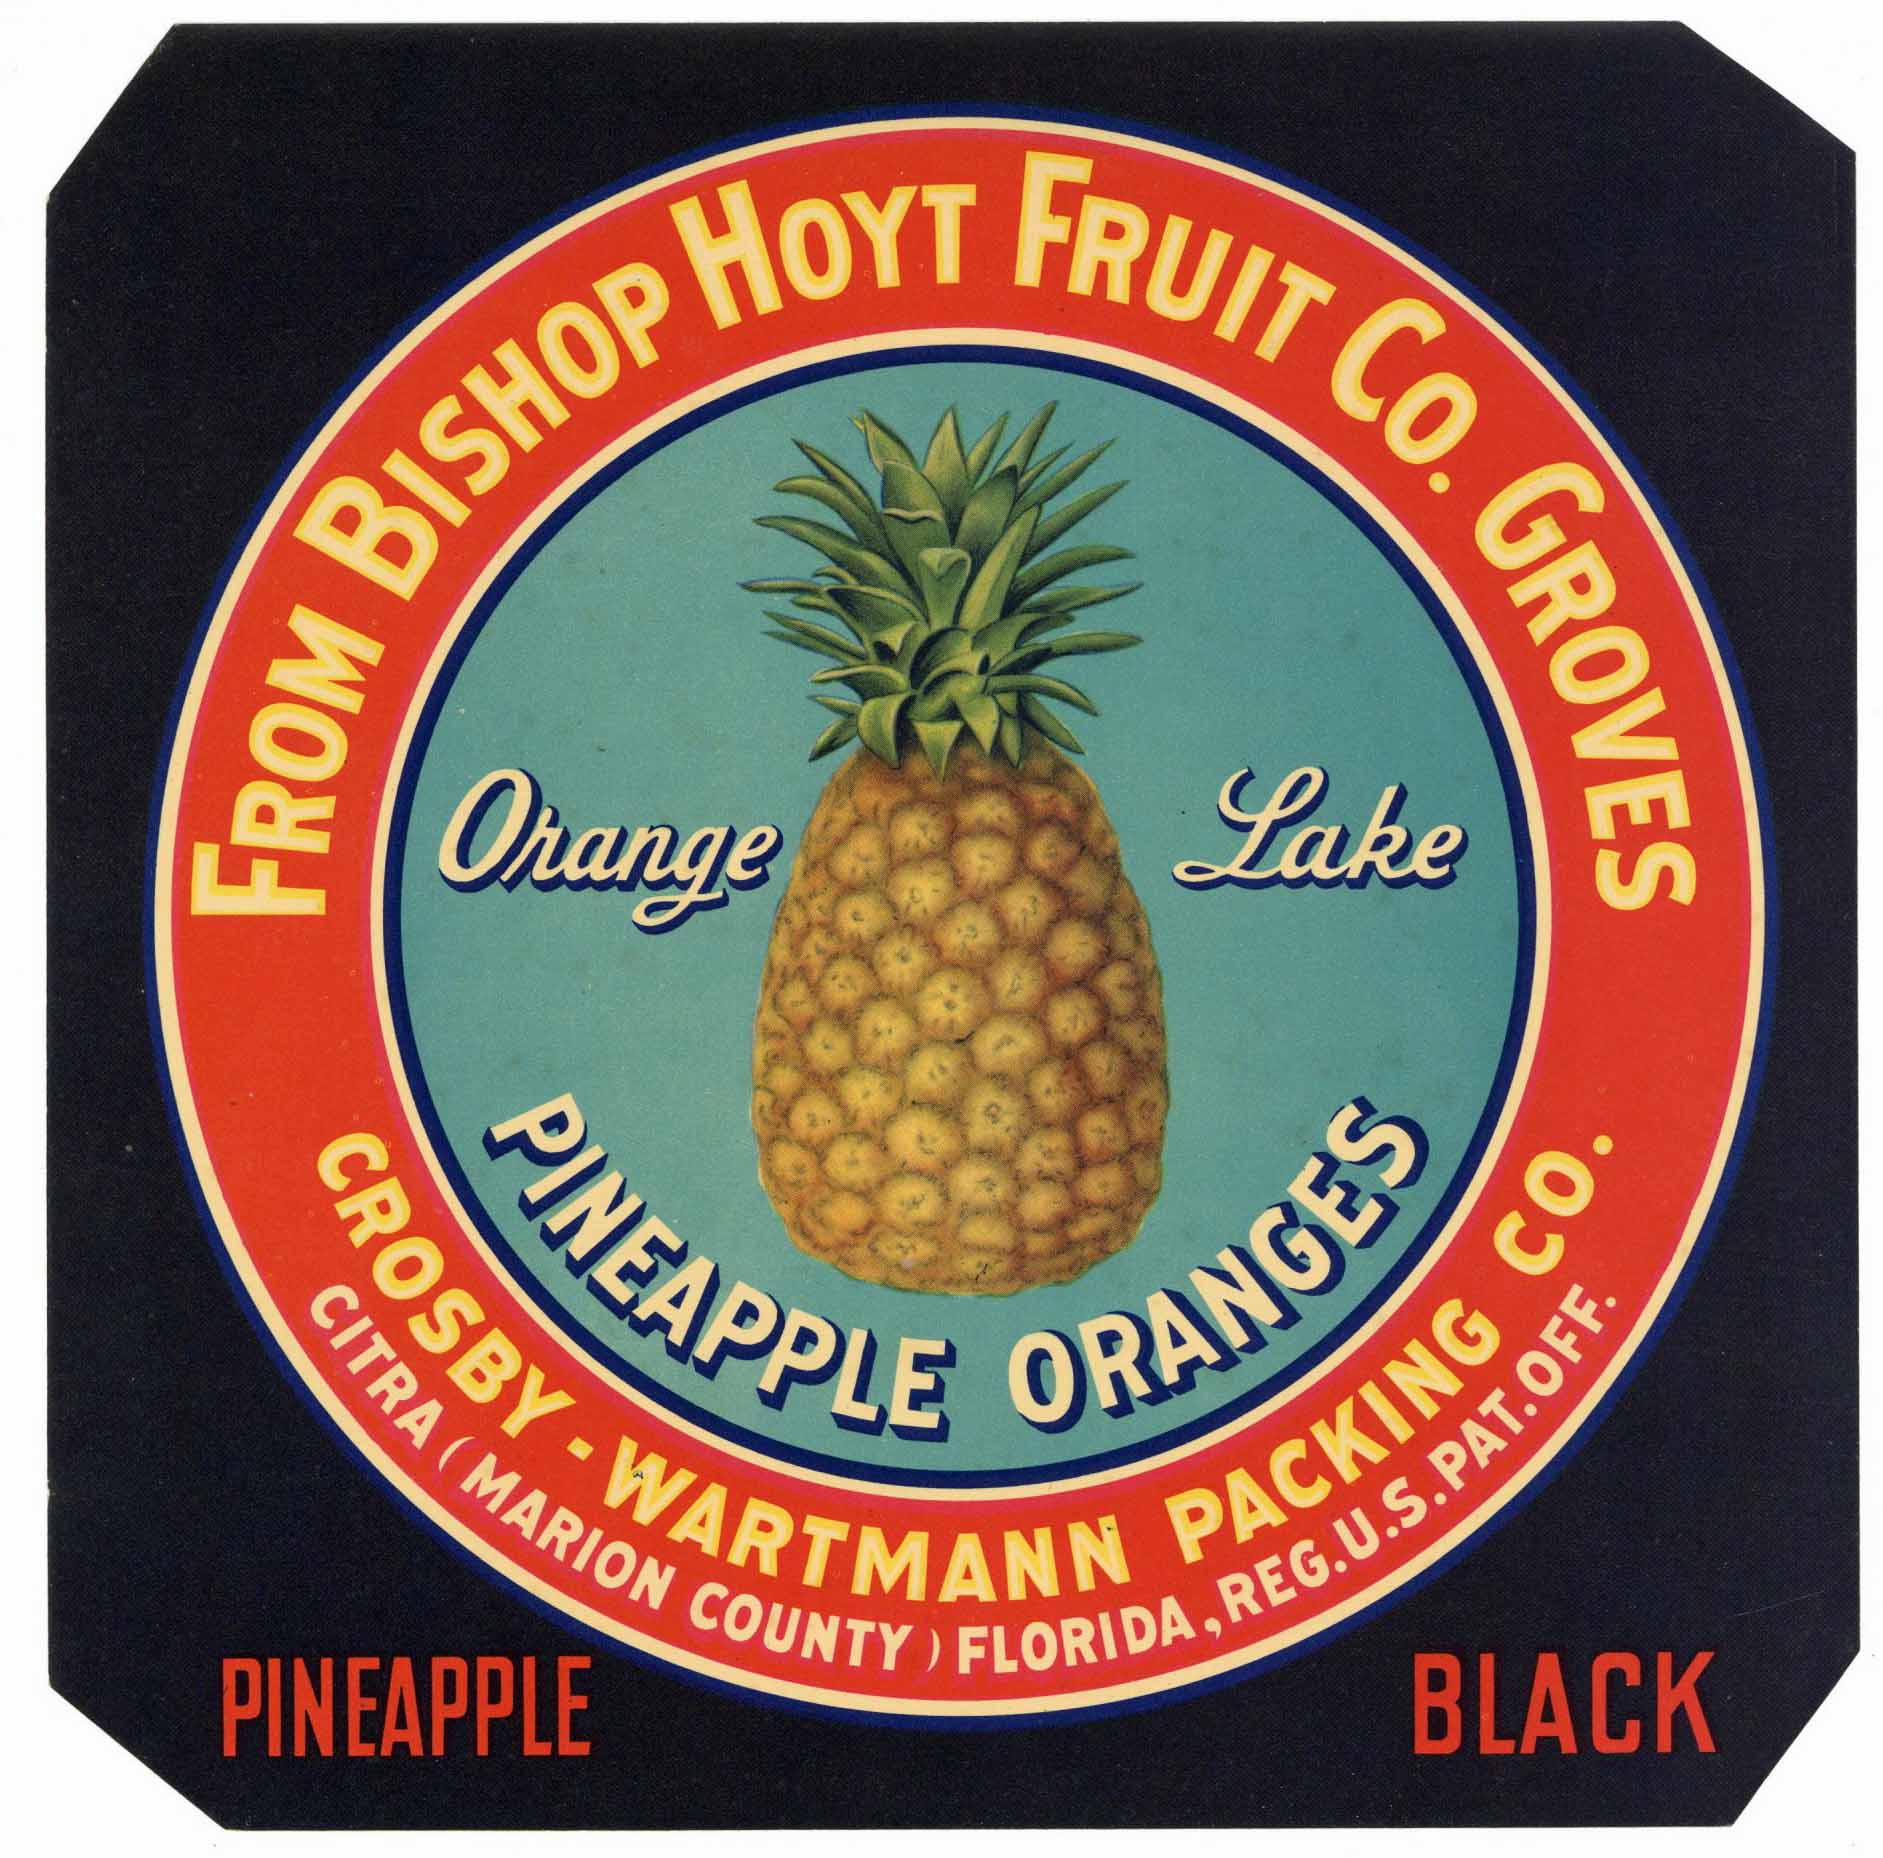 Pineapple Oranges Brand Vintage Citra Florida Citrus Crate Label, black